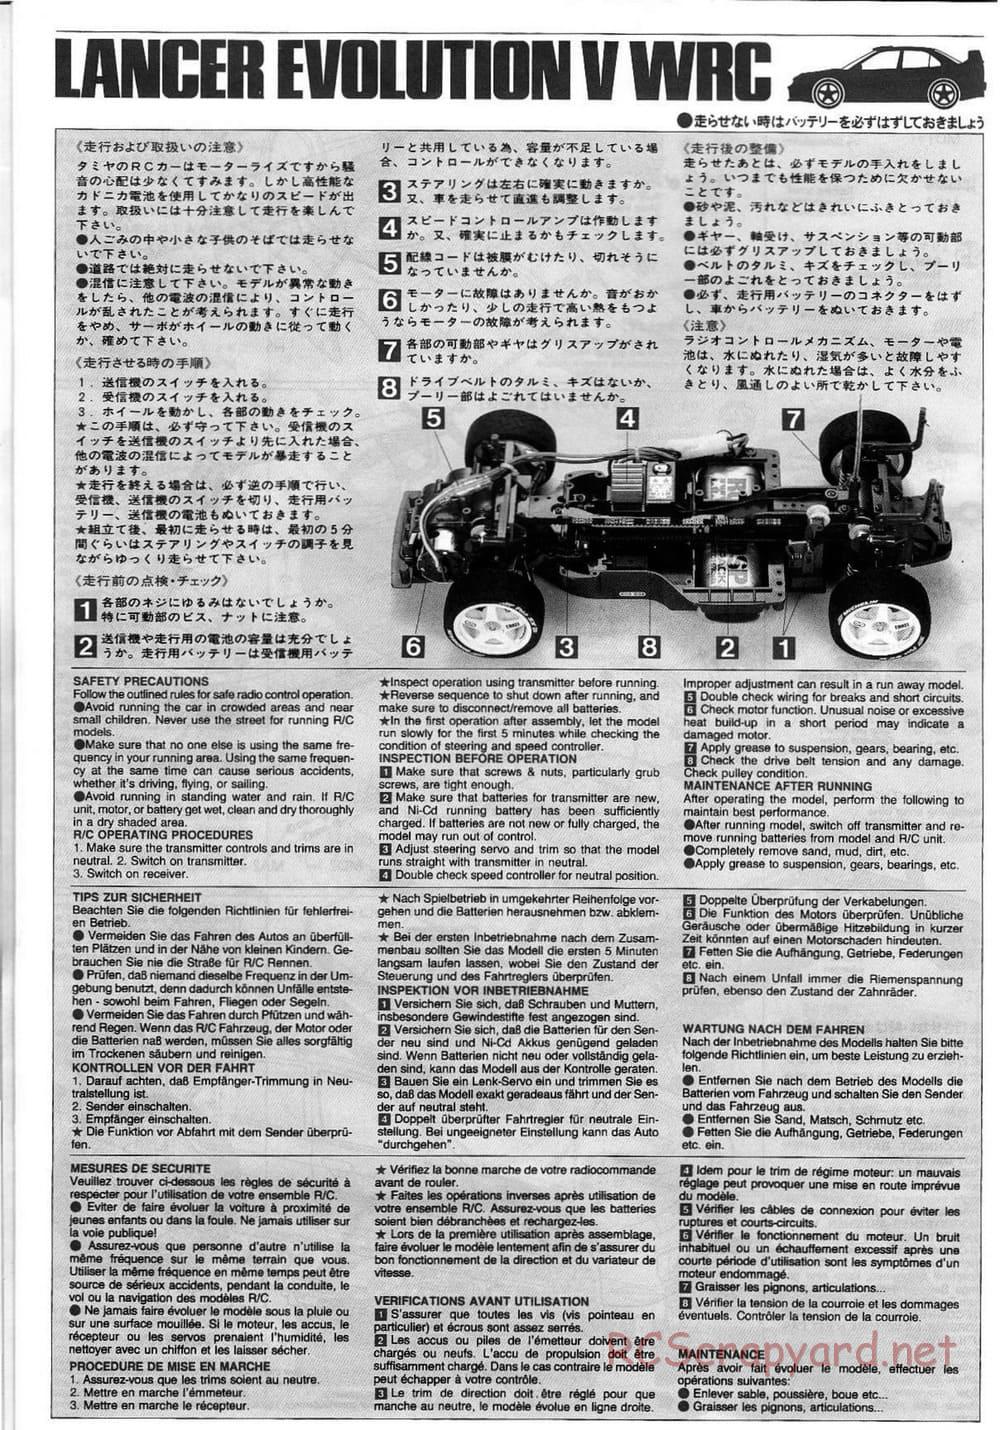 Tamiya - Mitsubishi Lancer Evolution V WRC - TA-03F Chassis - Manual - Page 20